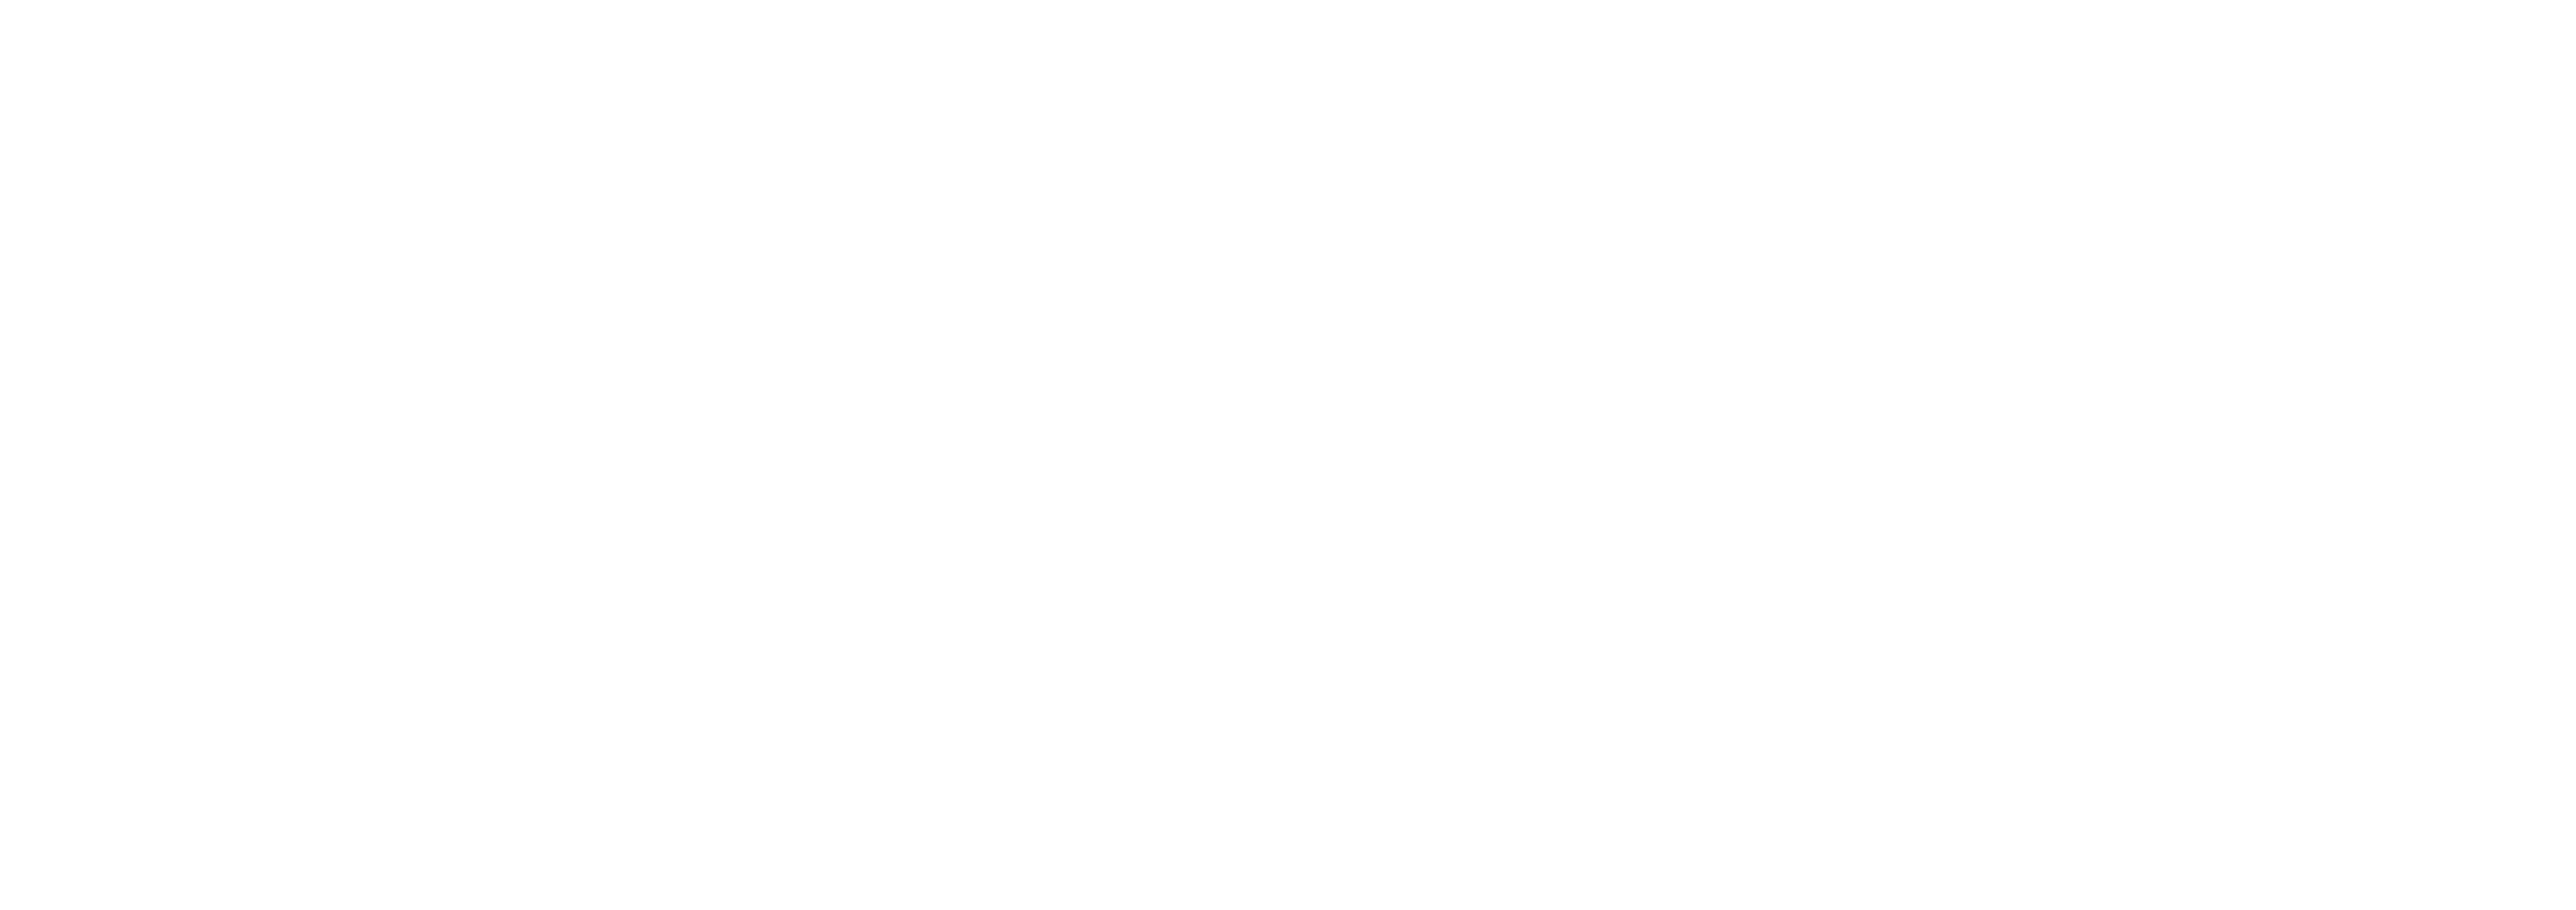 Kiss Sixth Sense logo